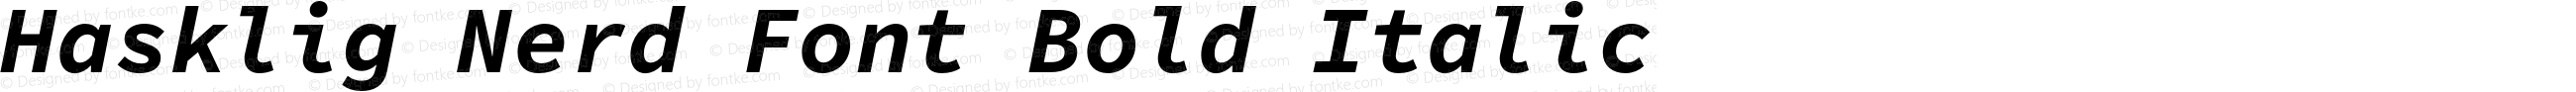 Hasklig Bold Italic Nerd Font Complete Mono